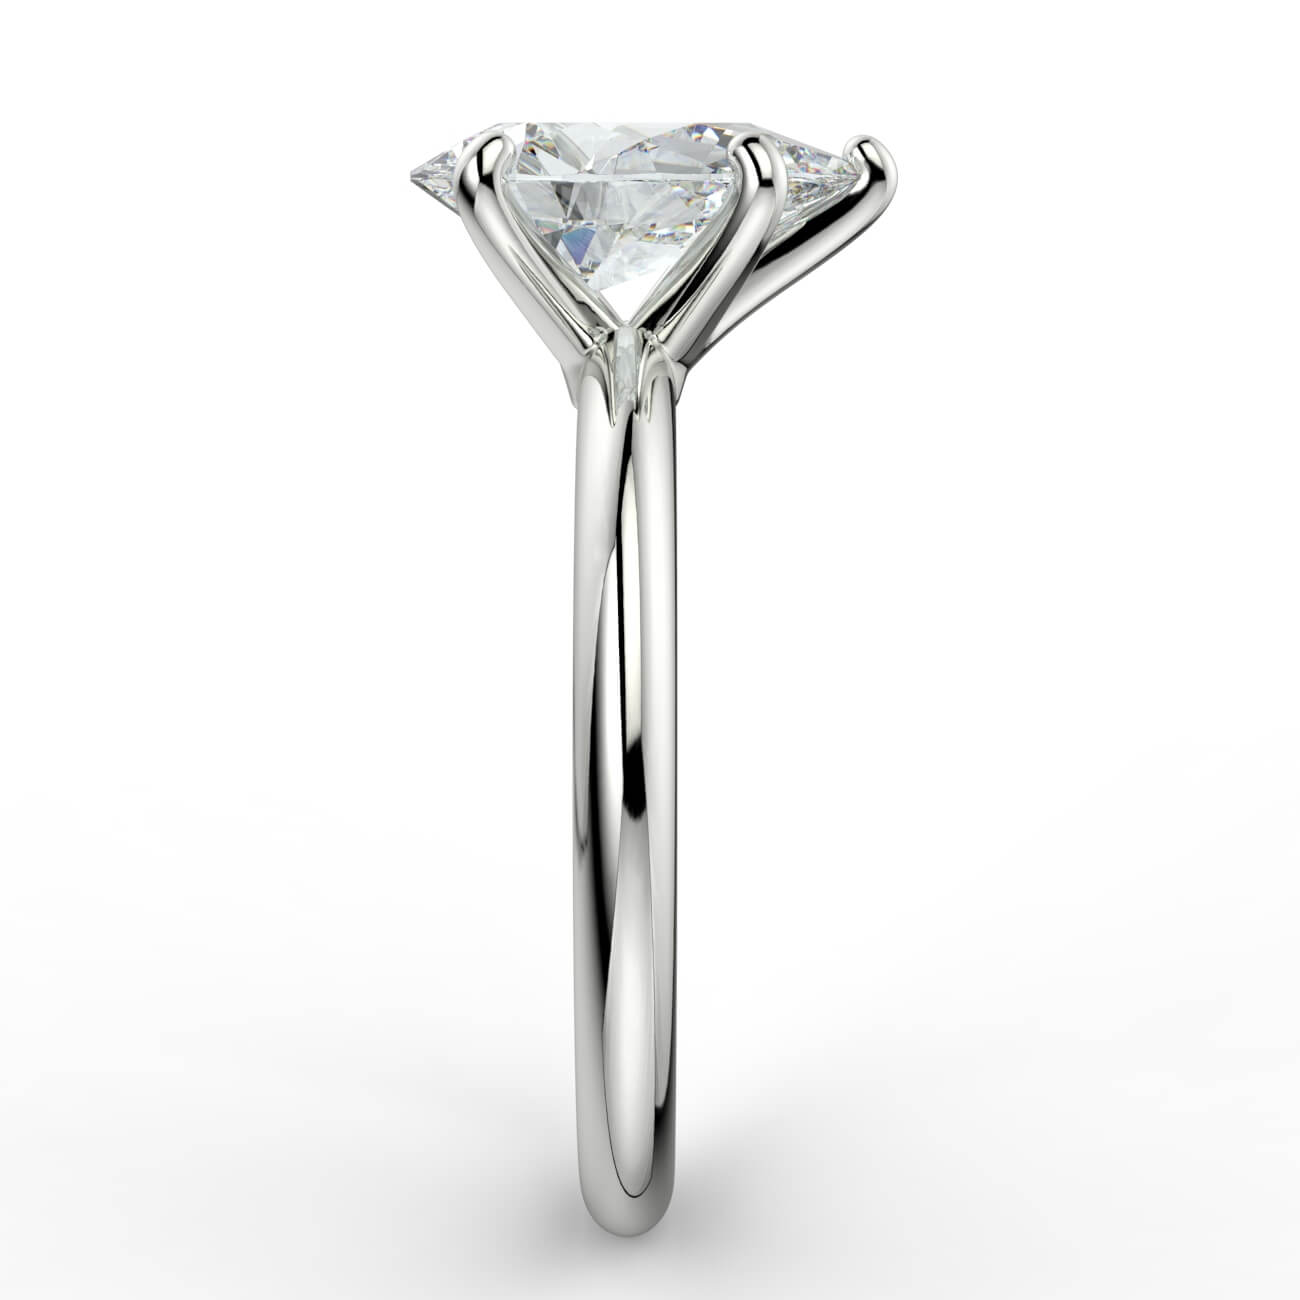 Solitaire pear shape diamond engagement ring in white gold – Australian Diamond Network